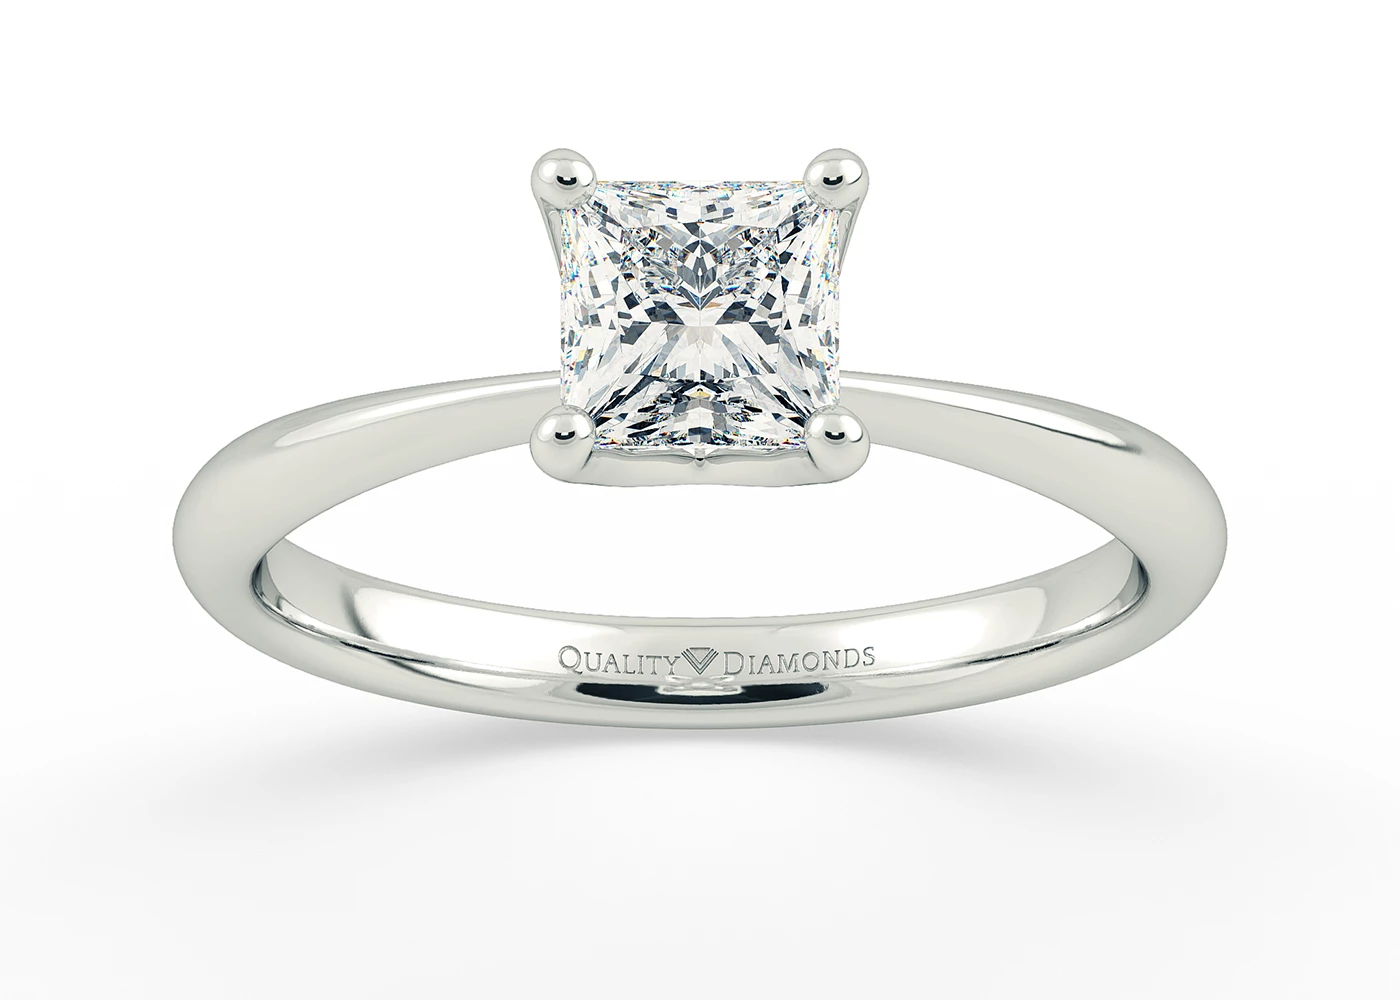 Two Carat Princess Solitaire Diamond Engagement Ring in Platinum 950